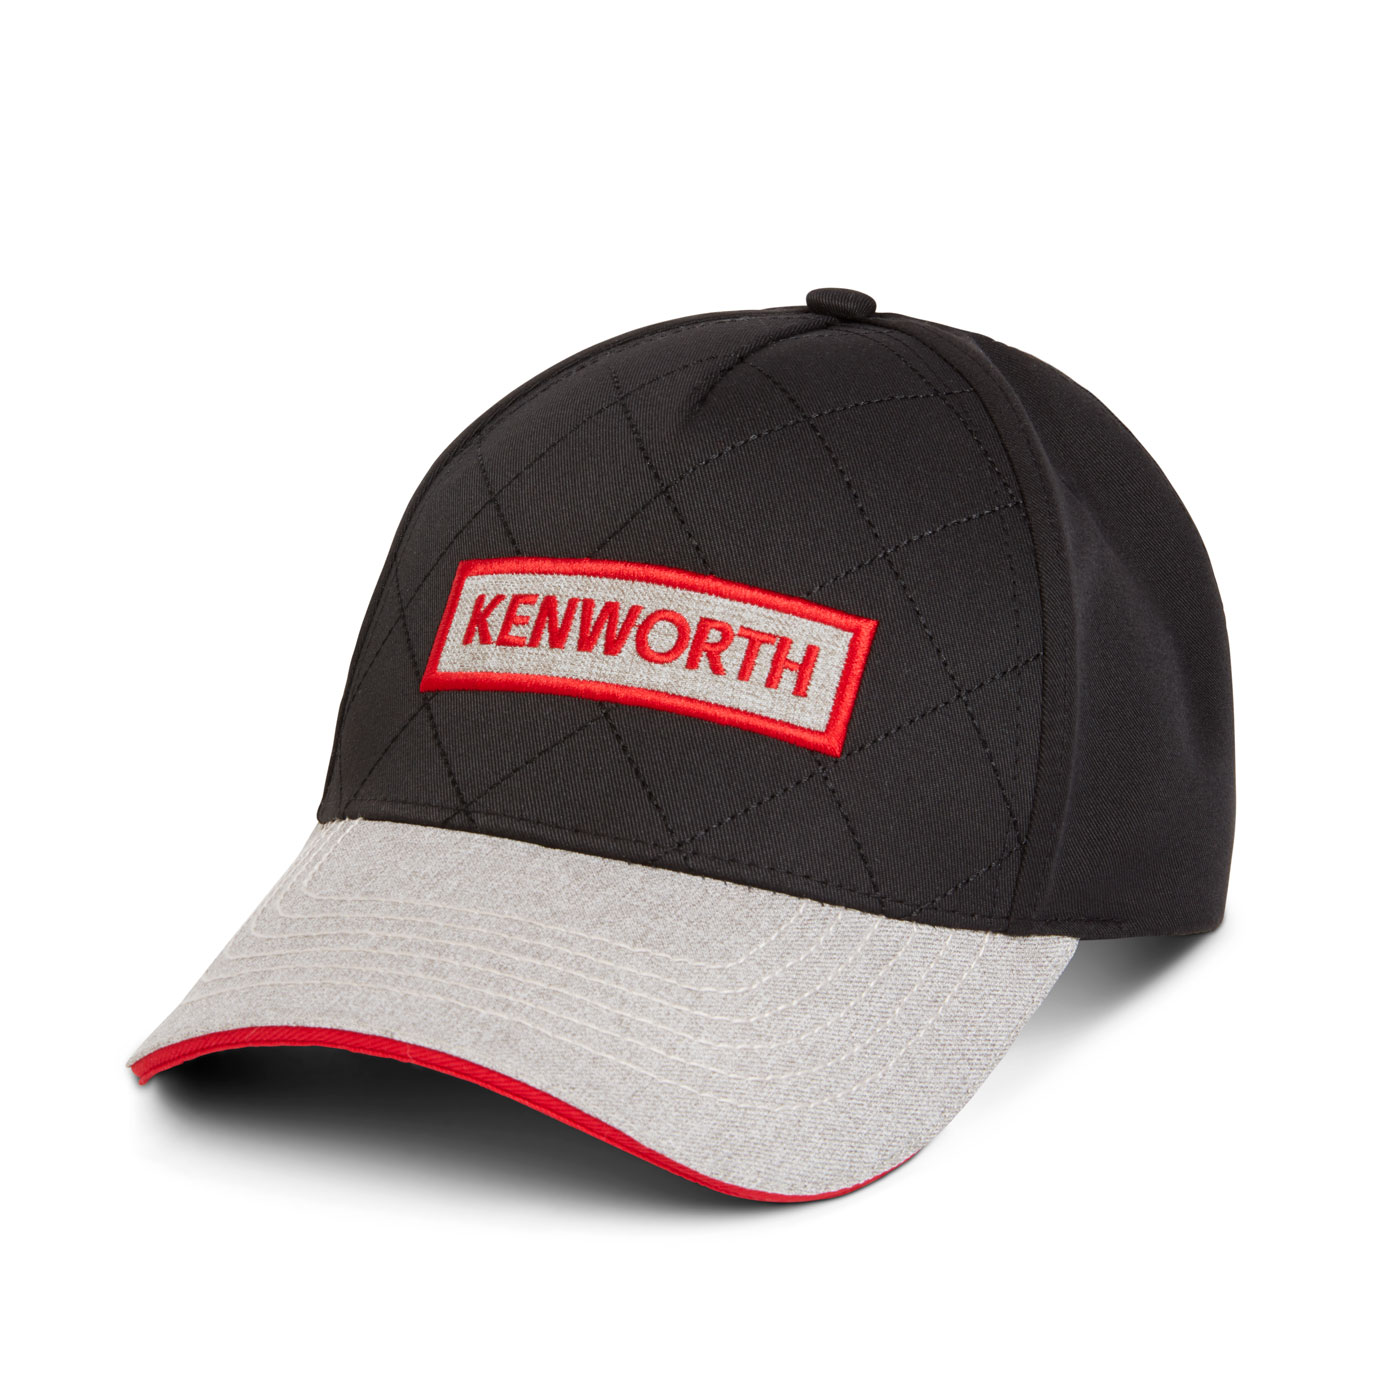 Diamond Stitched Kenworth Cap